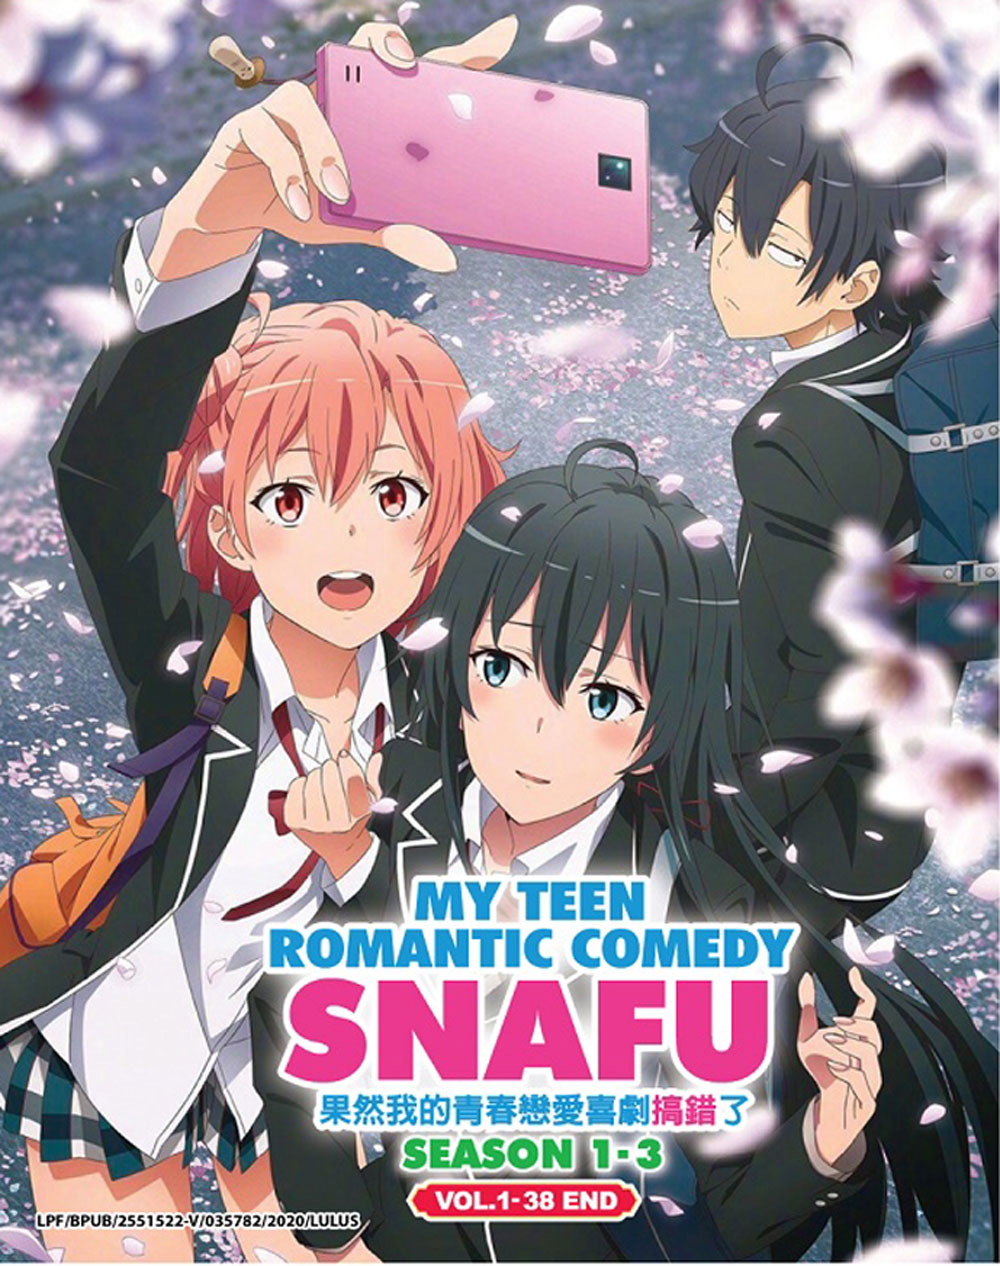 My Teen Romantic Comedy Snafu Season 1 3 Dvd 2013 2020 Anime Ep 1 38 End English Sub